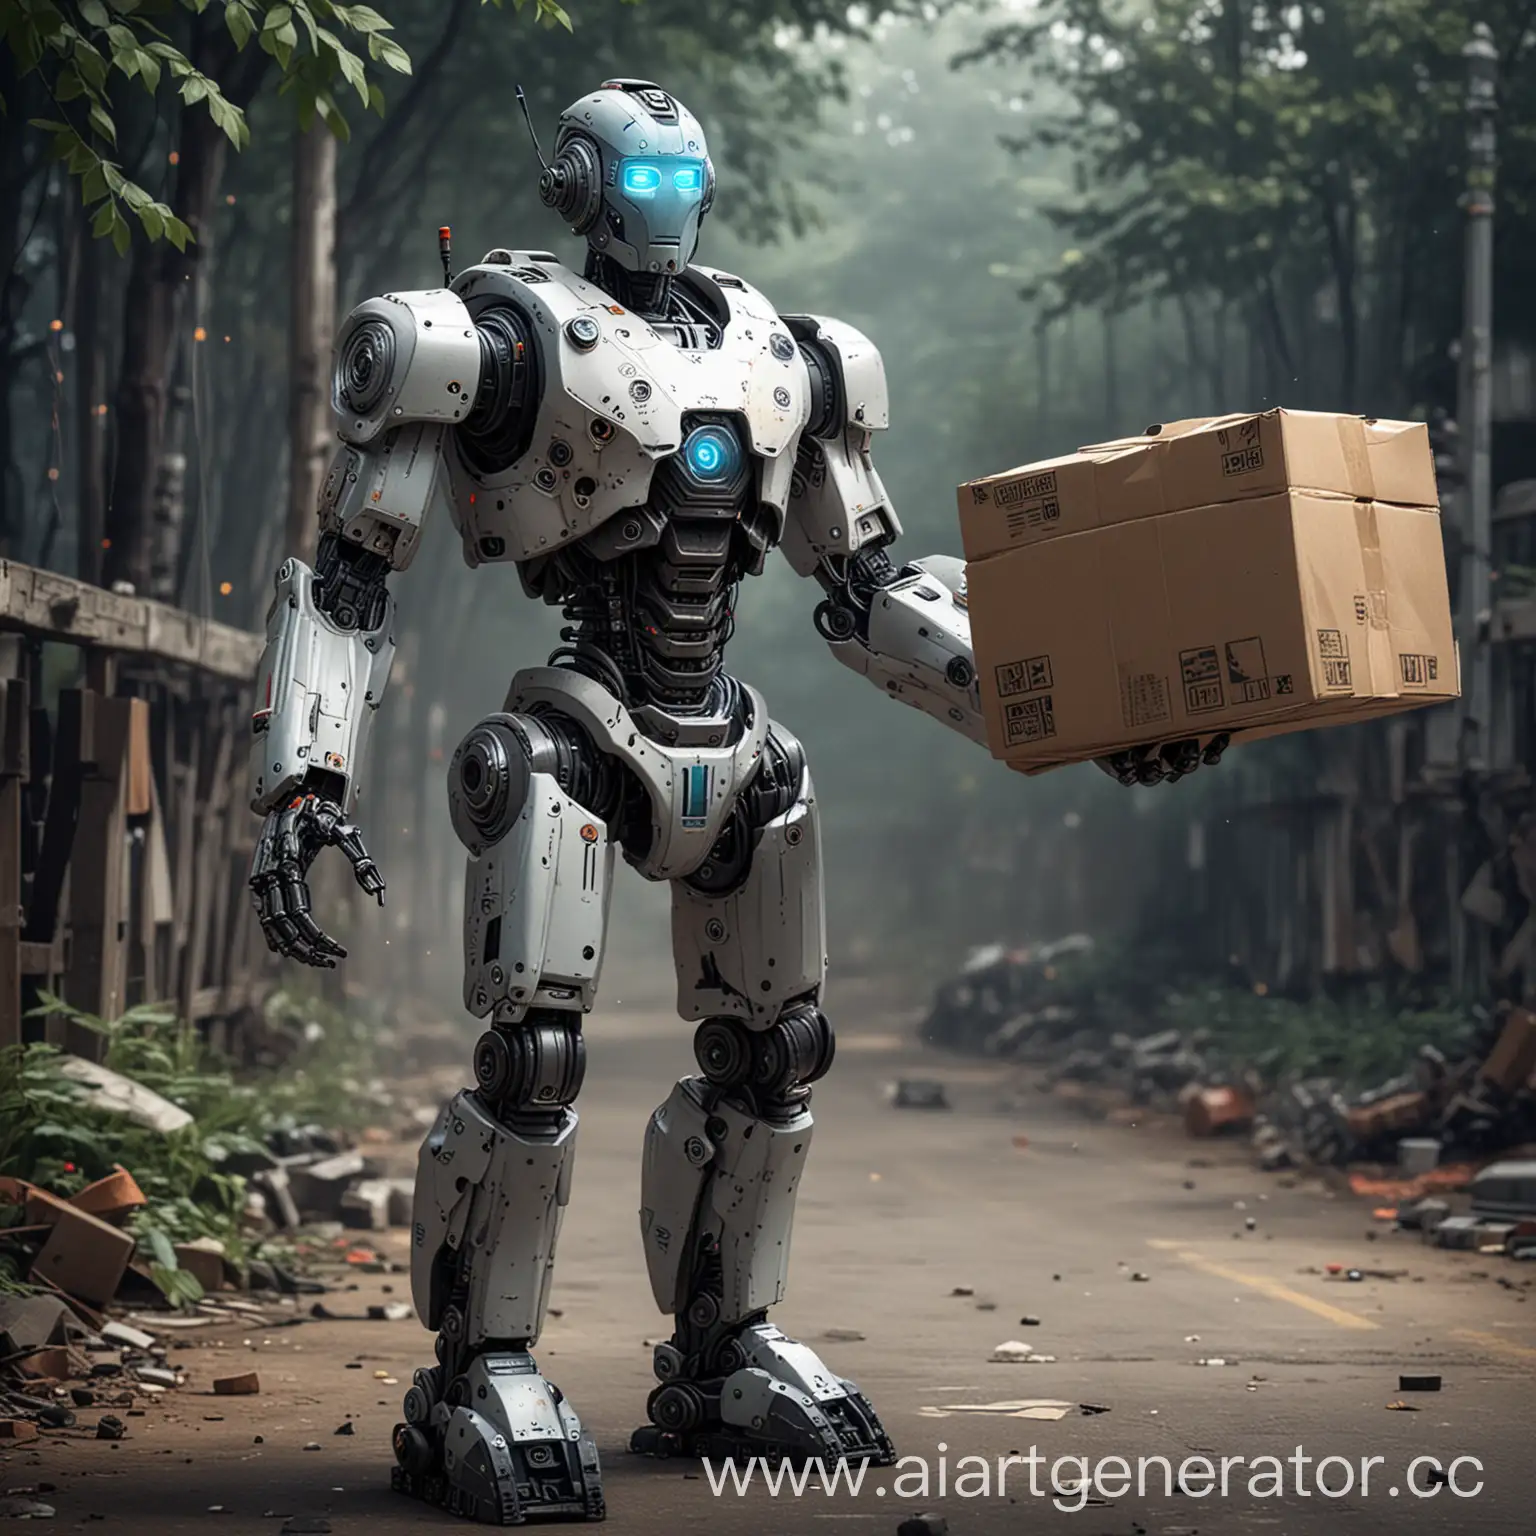 Futuristic-Robot-Deliverer-in-Urban-Environment